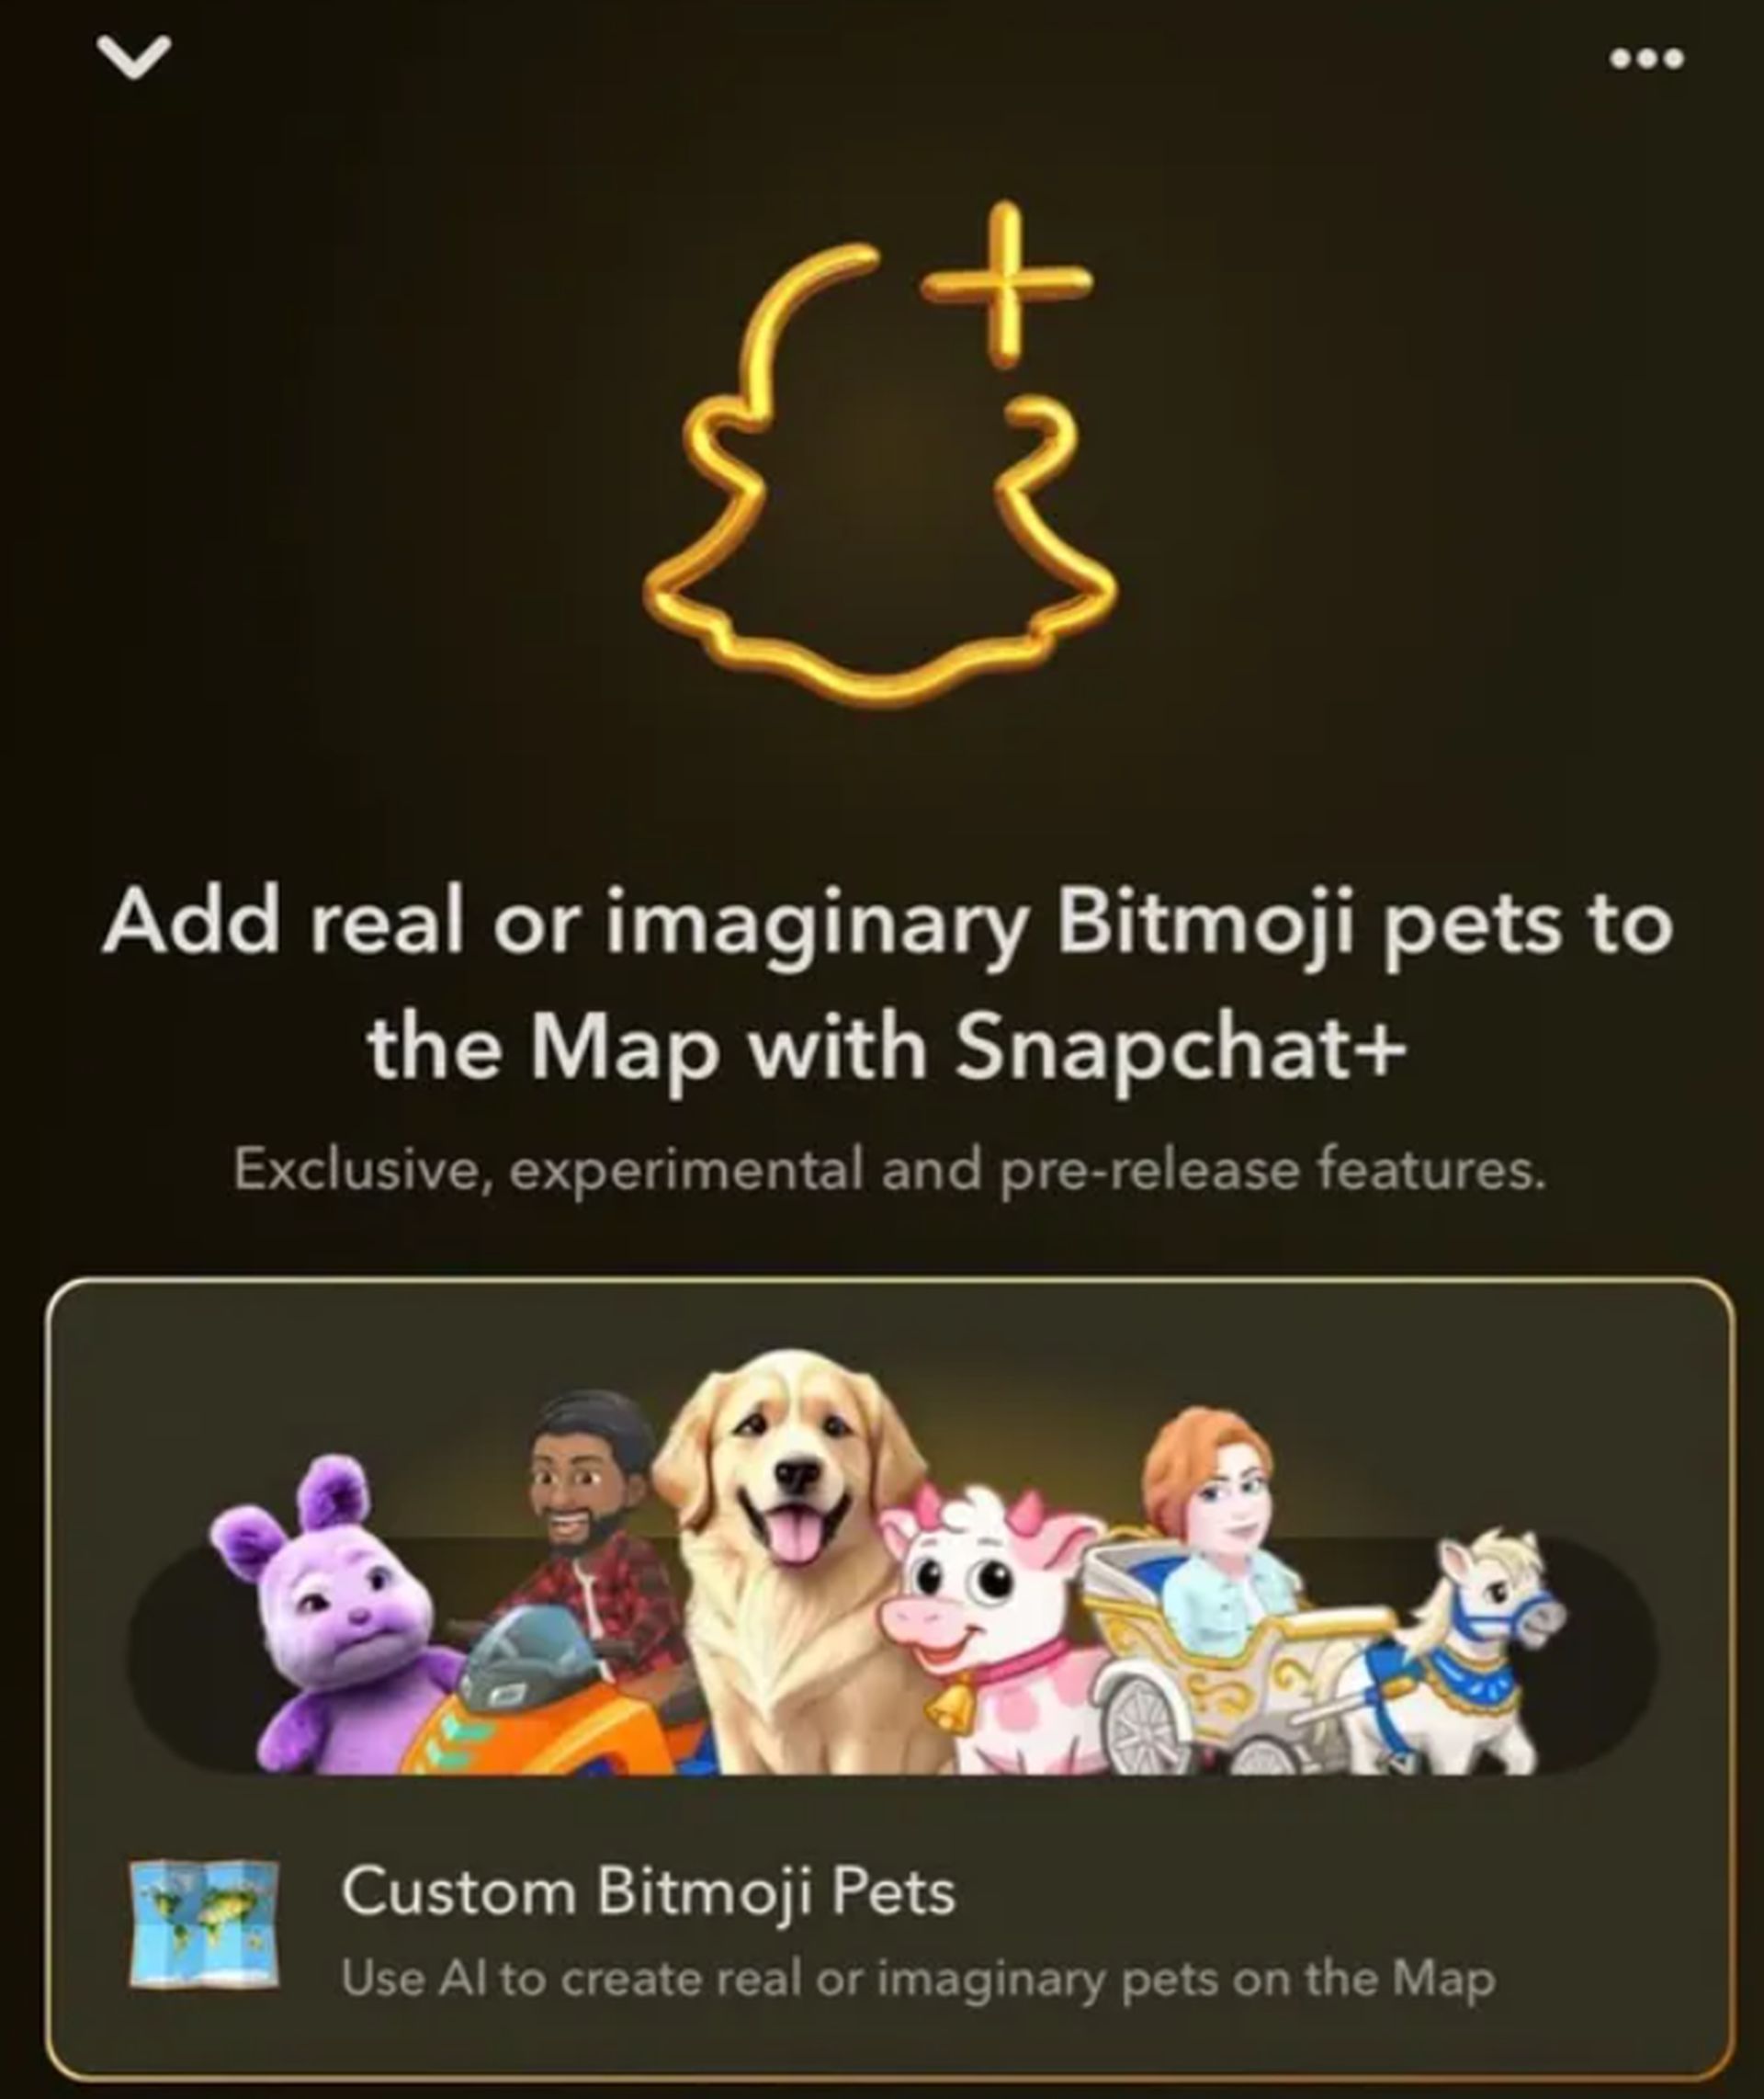 Snapchat AI Bitmoji pet feature: What is it?